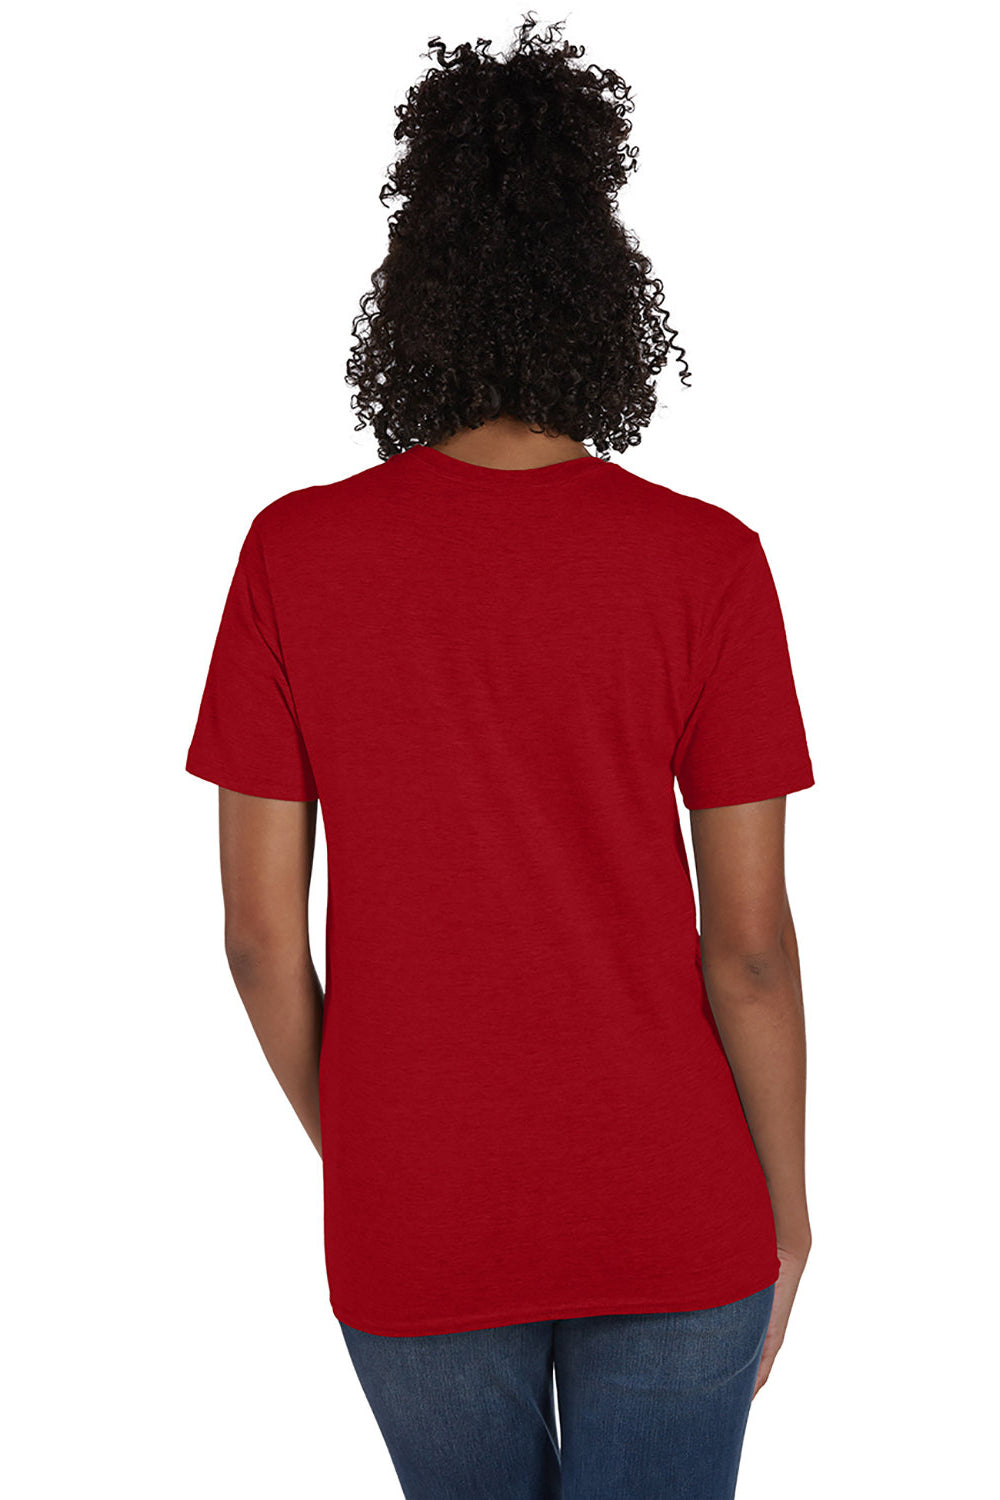 Hanes 4980 Mens Nano-T Short Sleeve Crewneck T-Shirt Heather Pepper Red Back